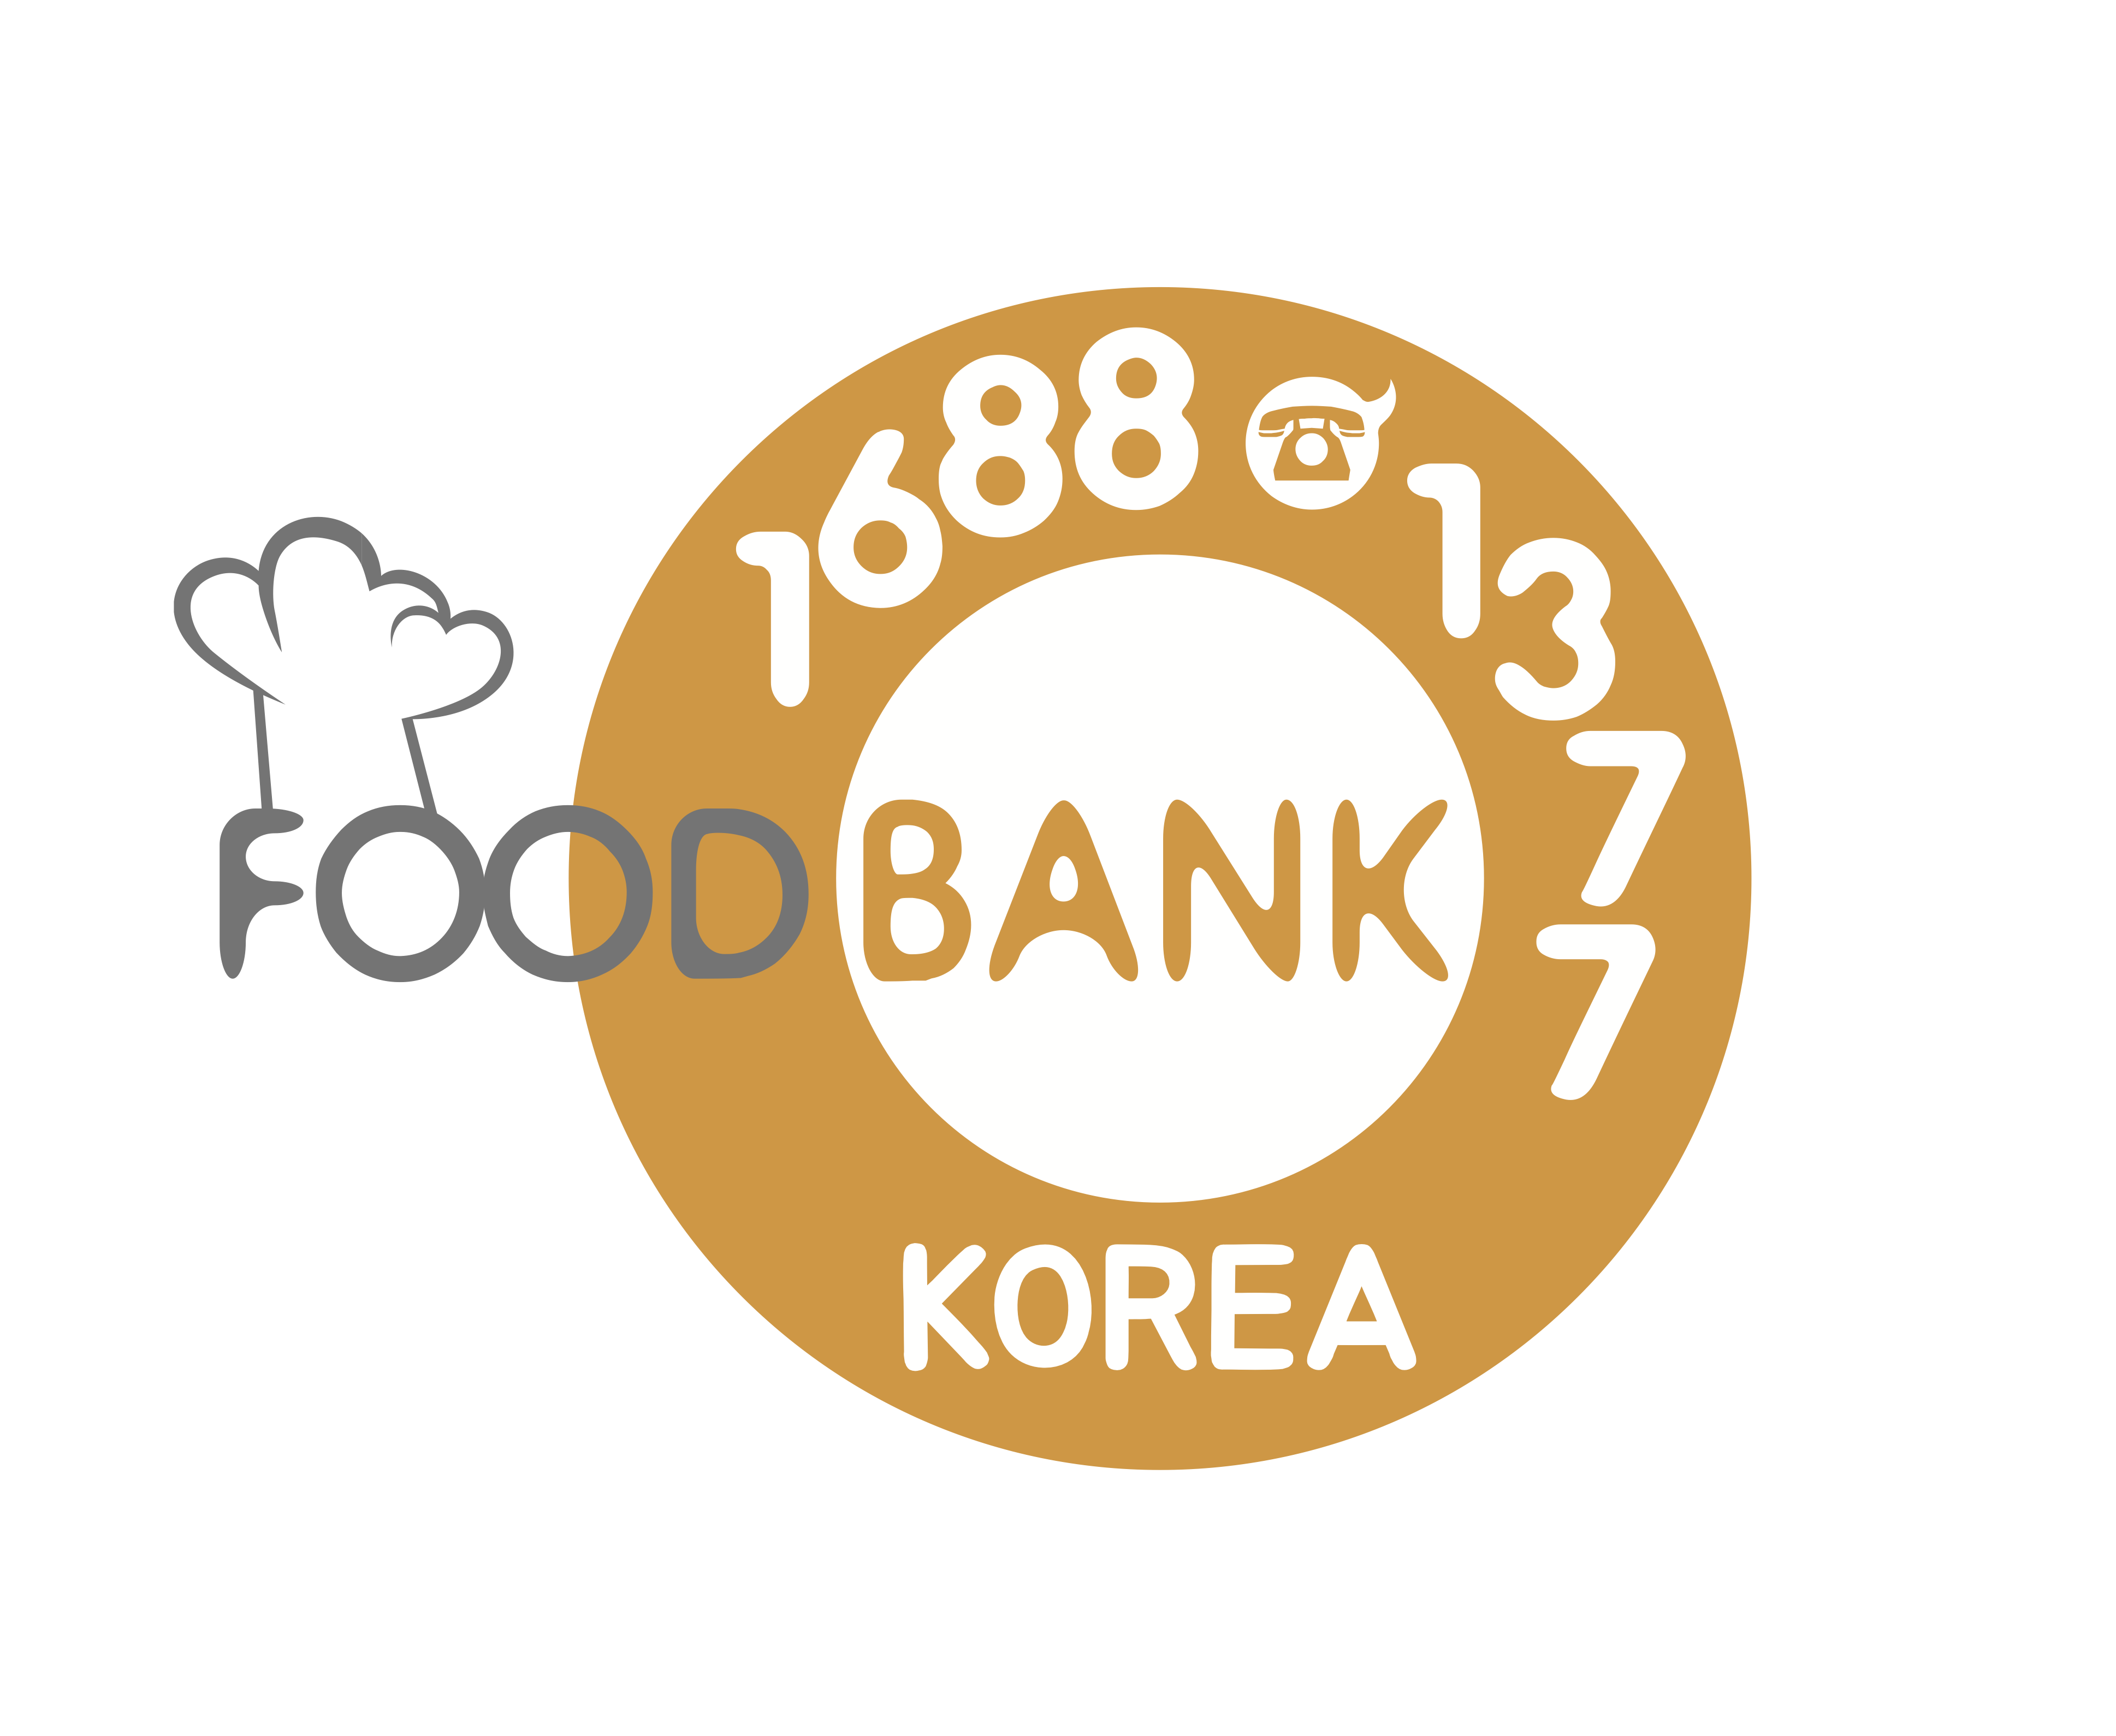 Korea Food Bank